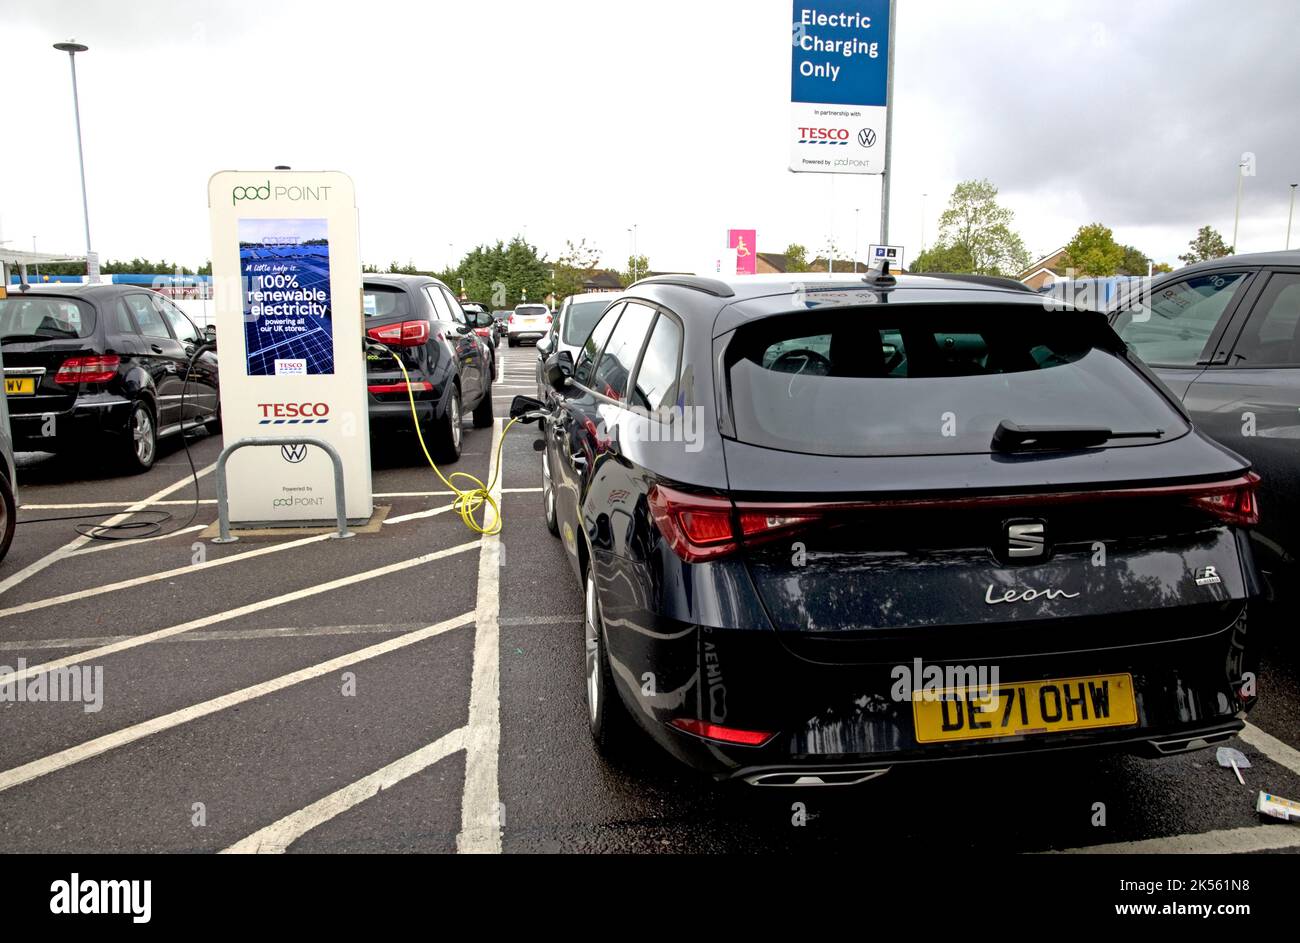 Dos vehículos eléctricos que cargan en Tesco 7kW puntos de carga gratis usando electricidad 100% renovable en Quedgely Gloucester UK Foto de stock